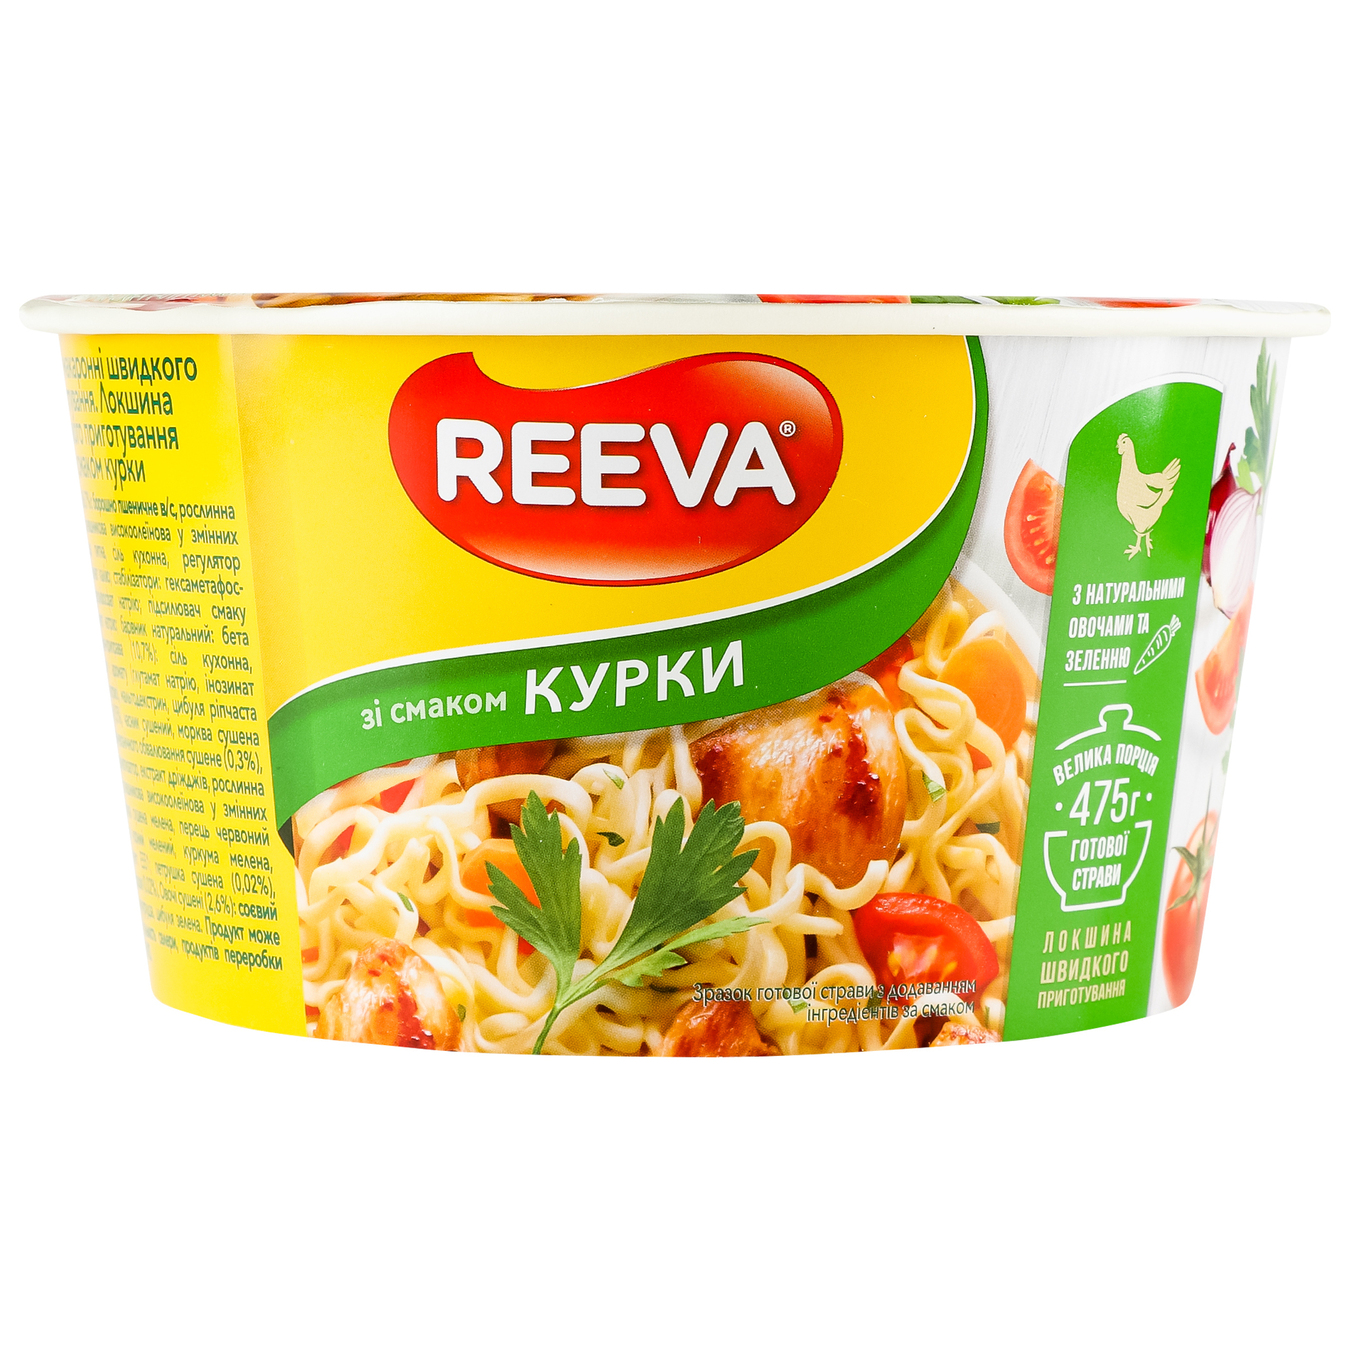 Instant noodles Reeva with chicken flavor 75g